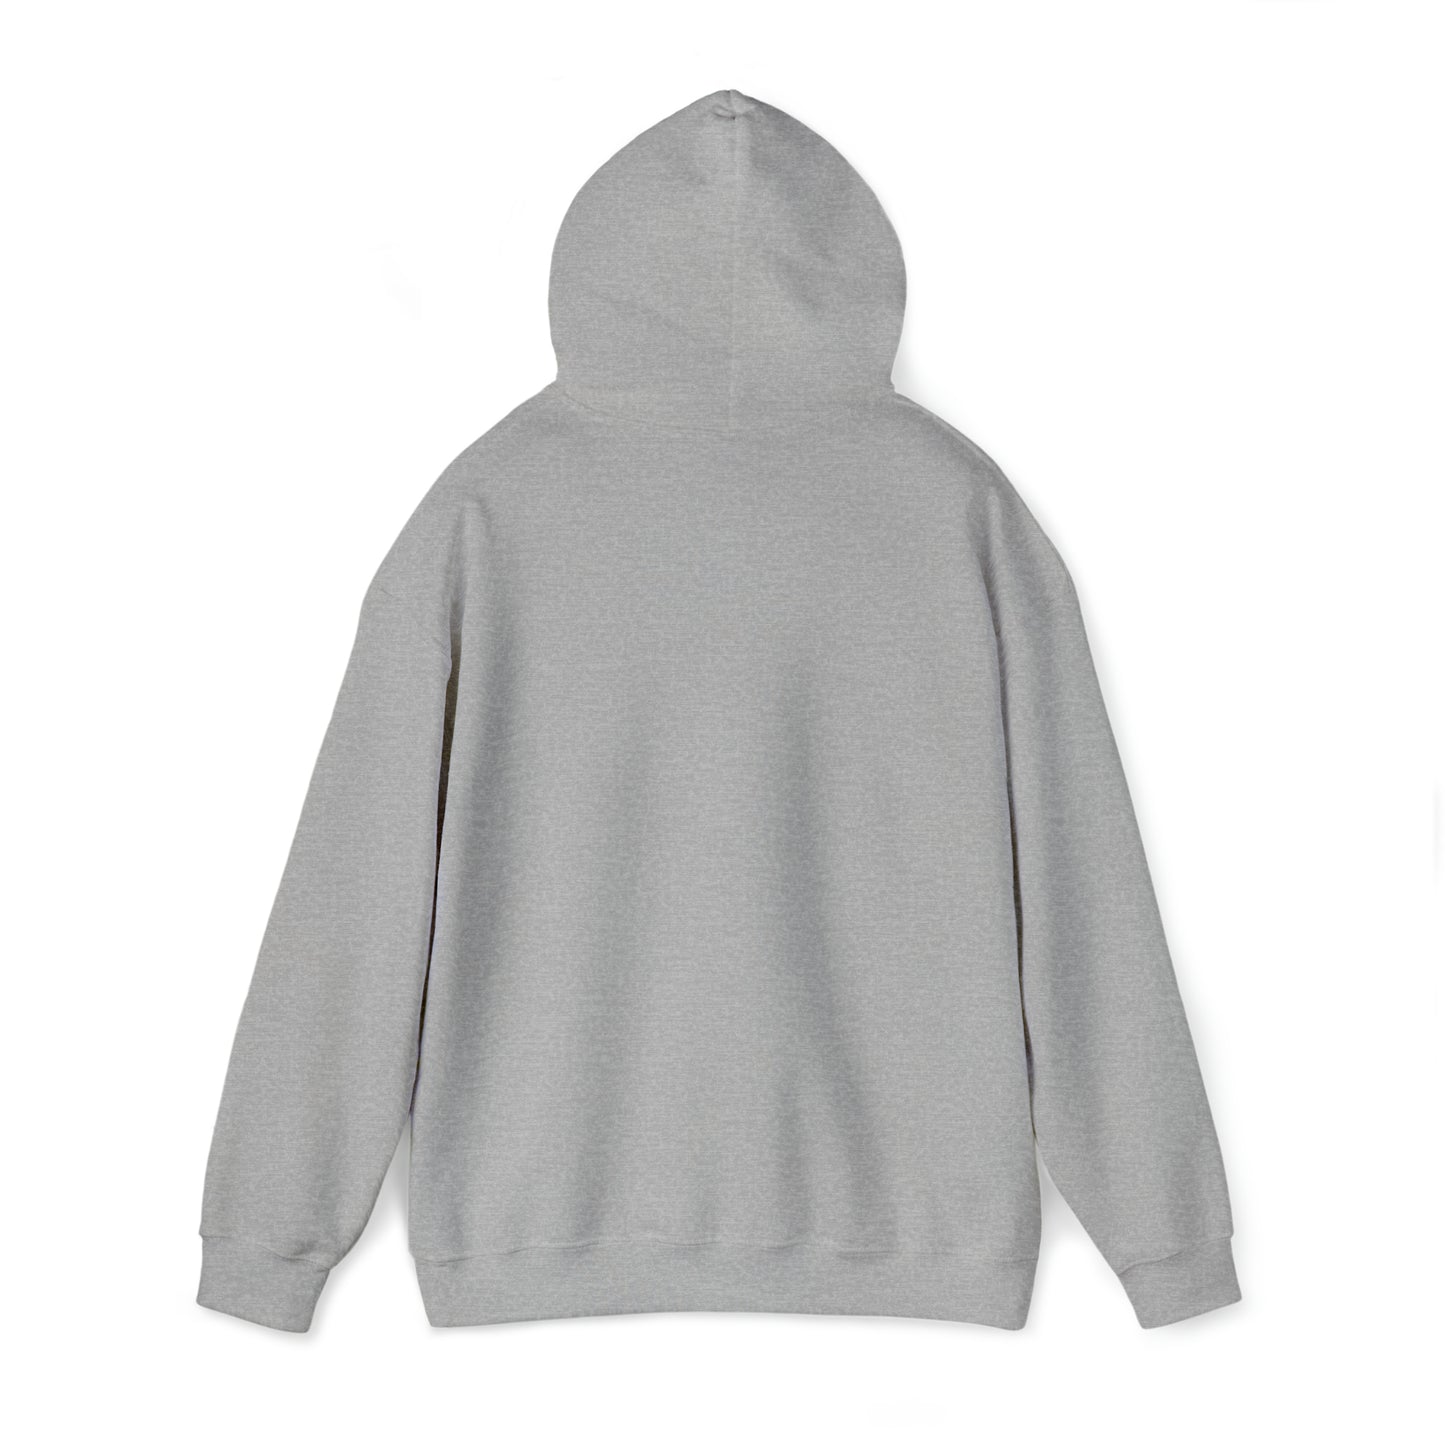 NYC Unisex Heavy Blend™ Hooded Sweatshirt